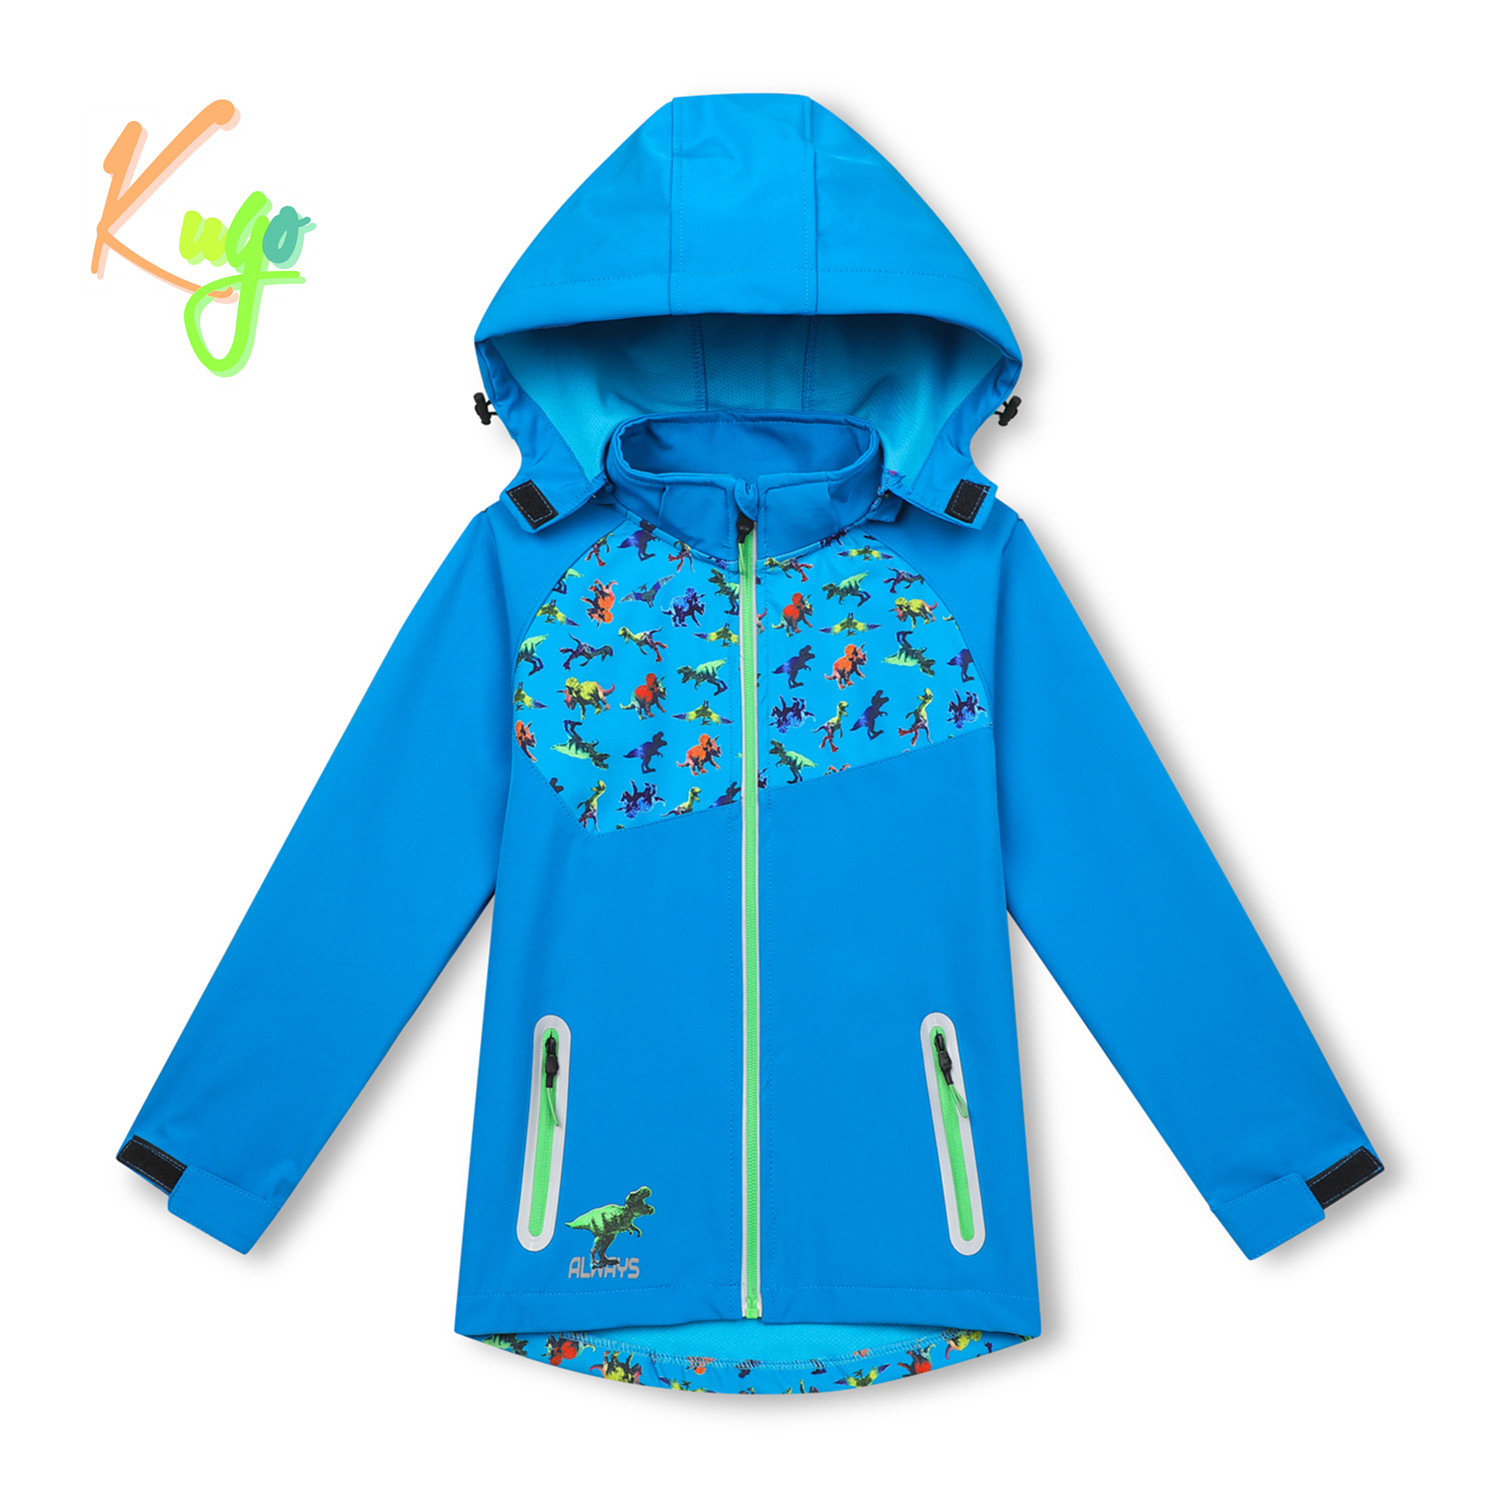 Chlapecká softshellová bunda - KUGO HK3123, modrá Barva: Modrá, Velikost: 116